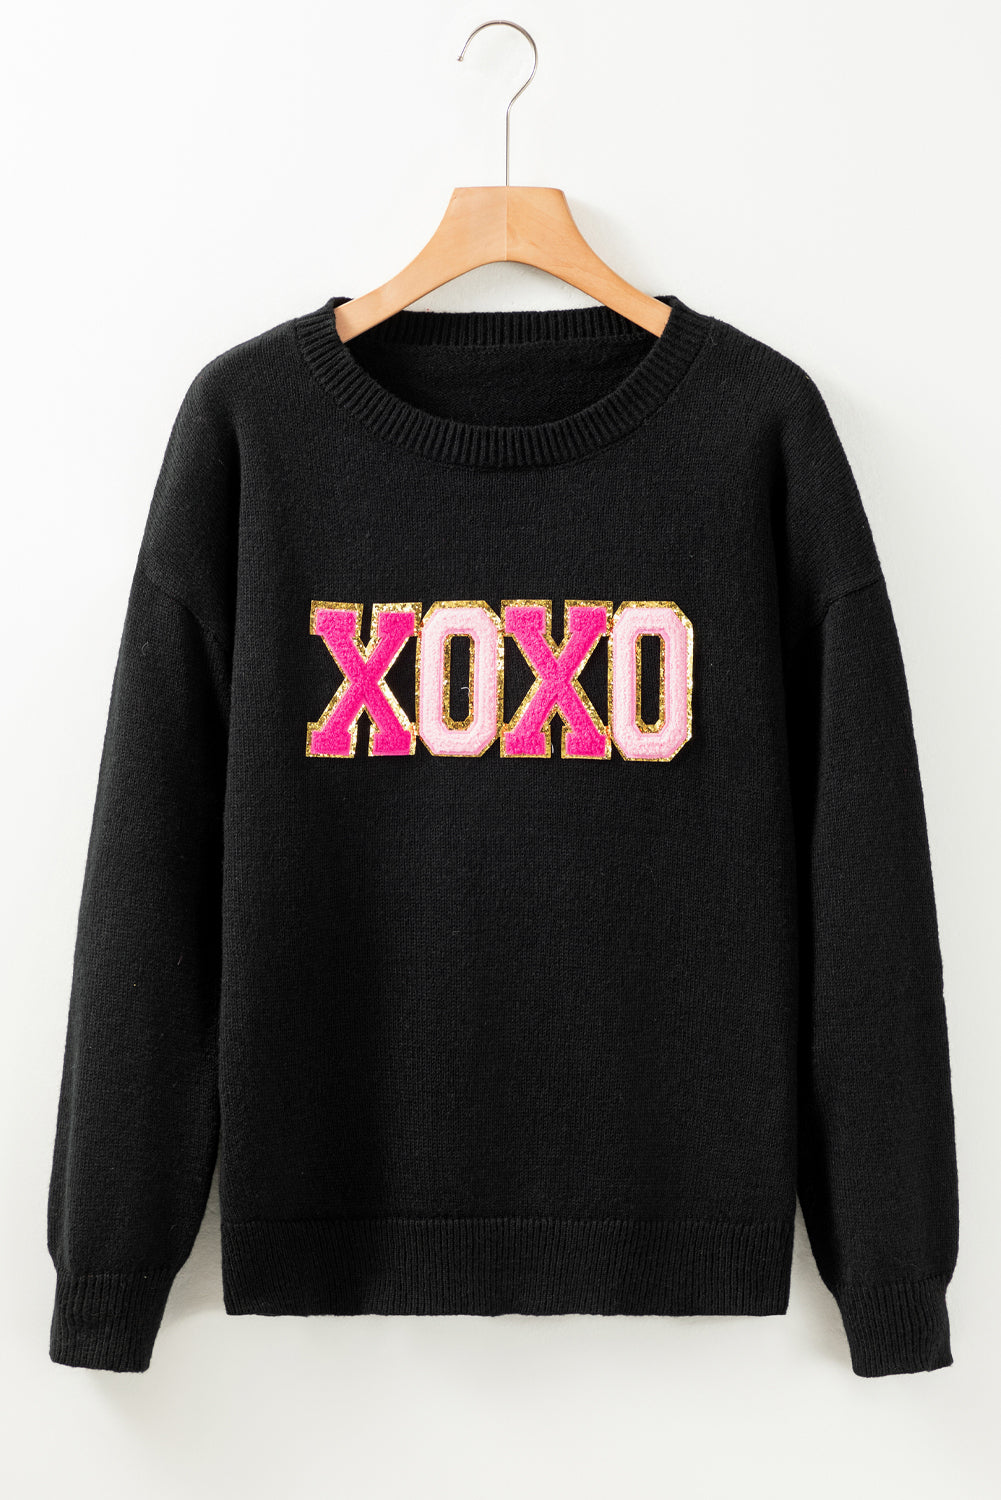 Rožnat pulover za prosti čas z okroglim izrezom v obliki srčka